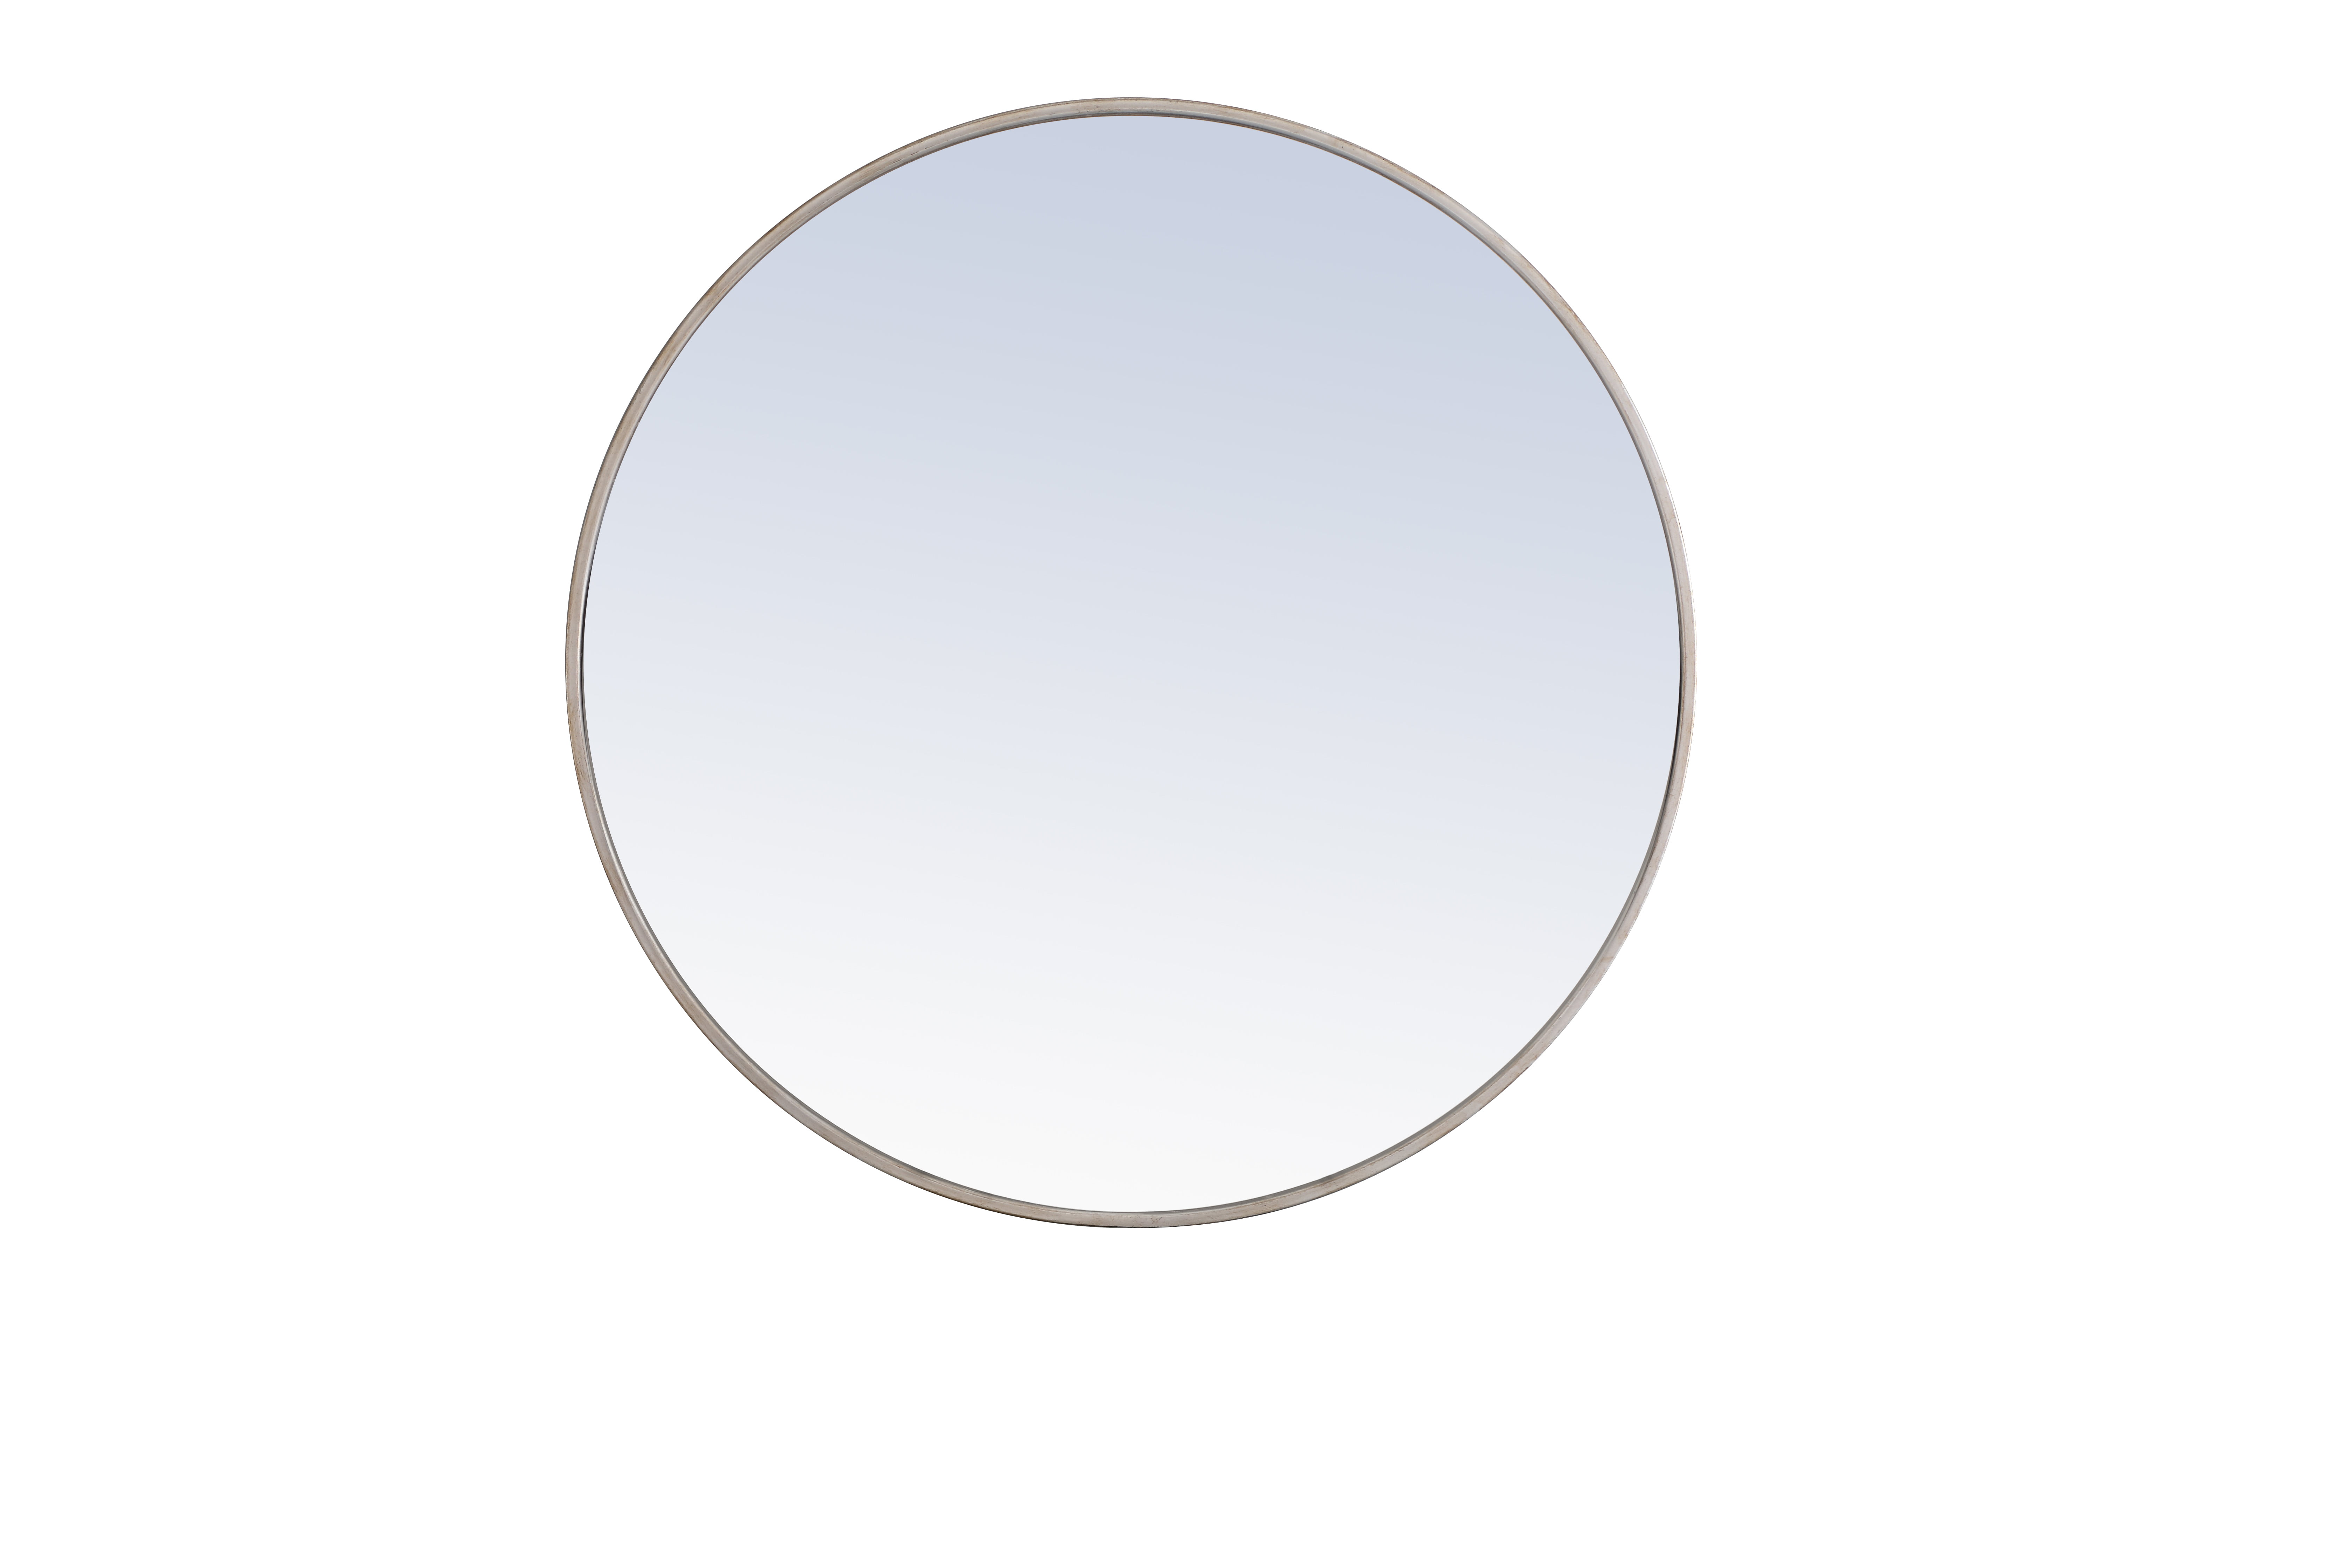 Elegant Decor Metal Frame Round Mirror with Decorative Hook 42 inch Blue